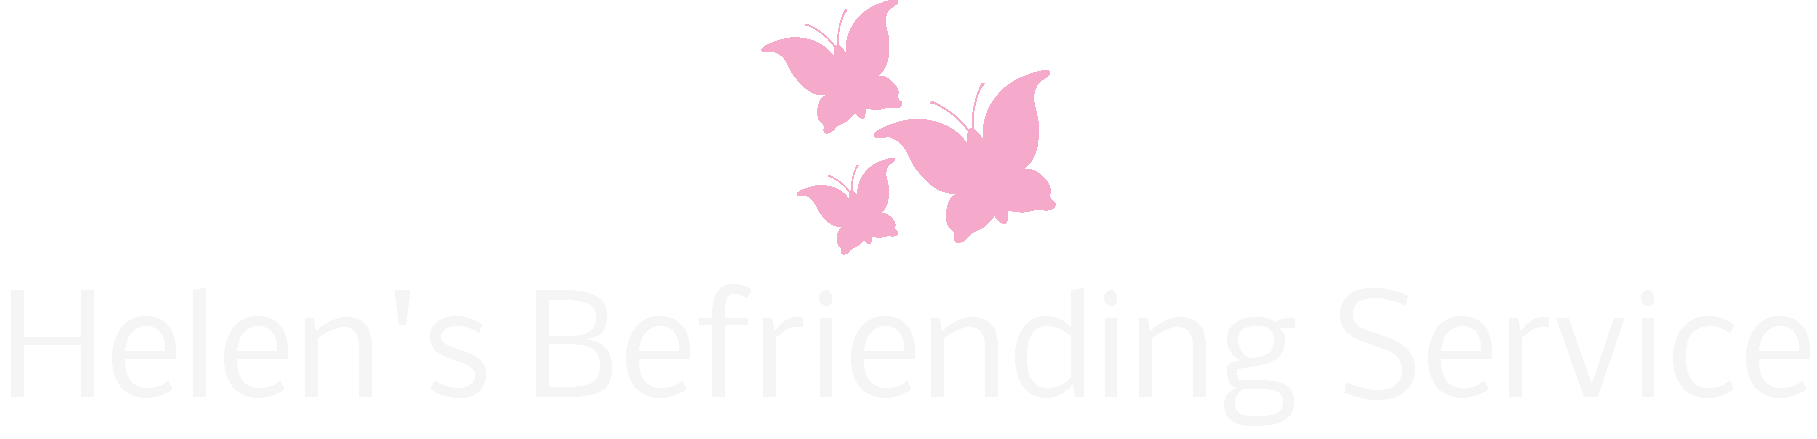 Helen's Befriending Service logo